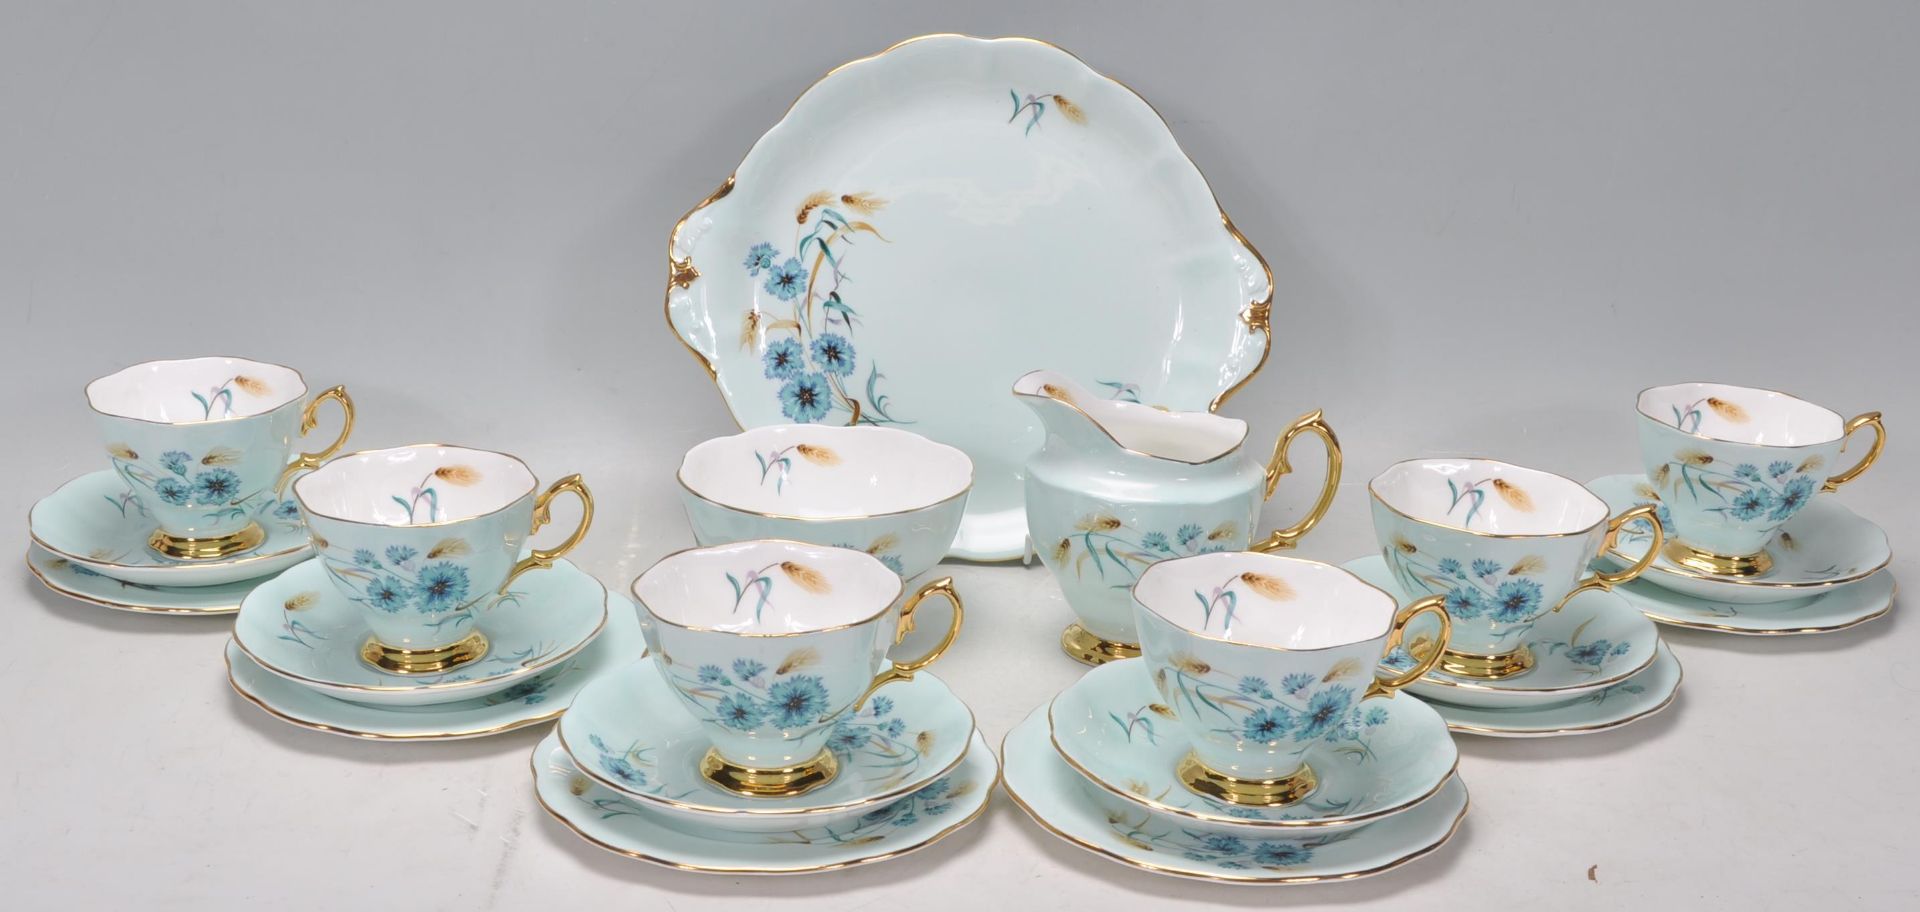 An vintage 20th Century Royal Albert fine bone china tea service all decorated in floral sprays - Bild 2 aus 10